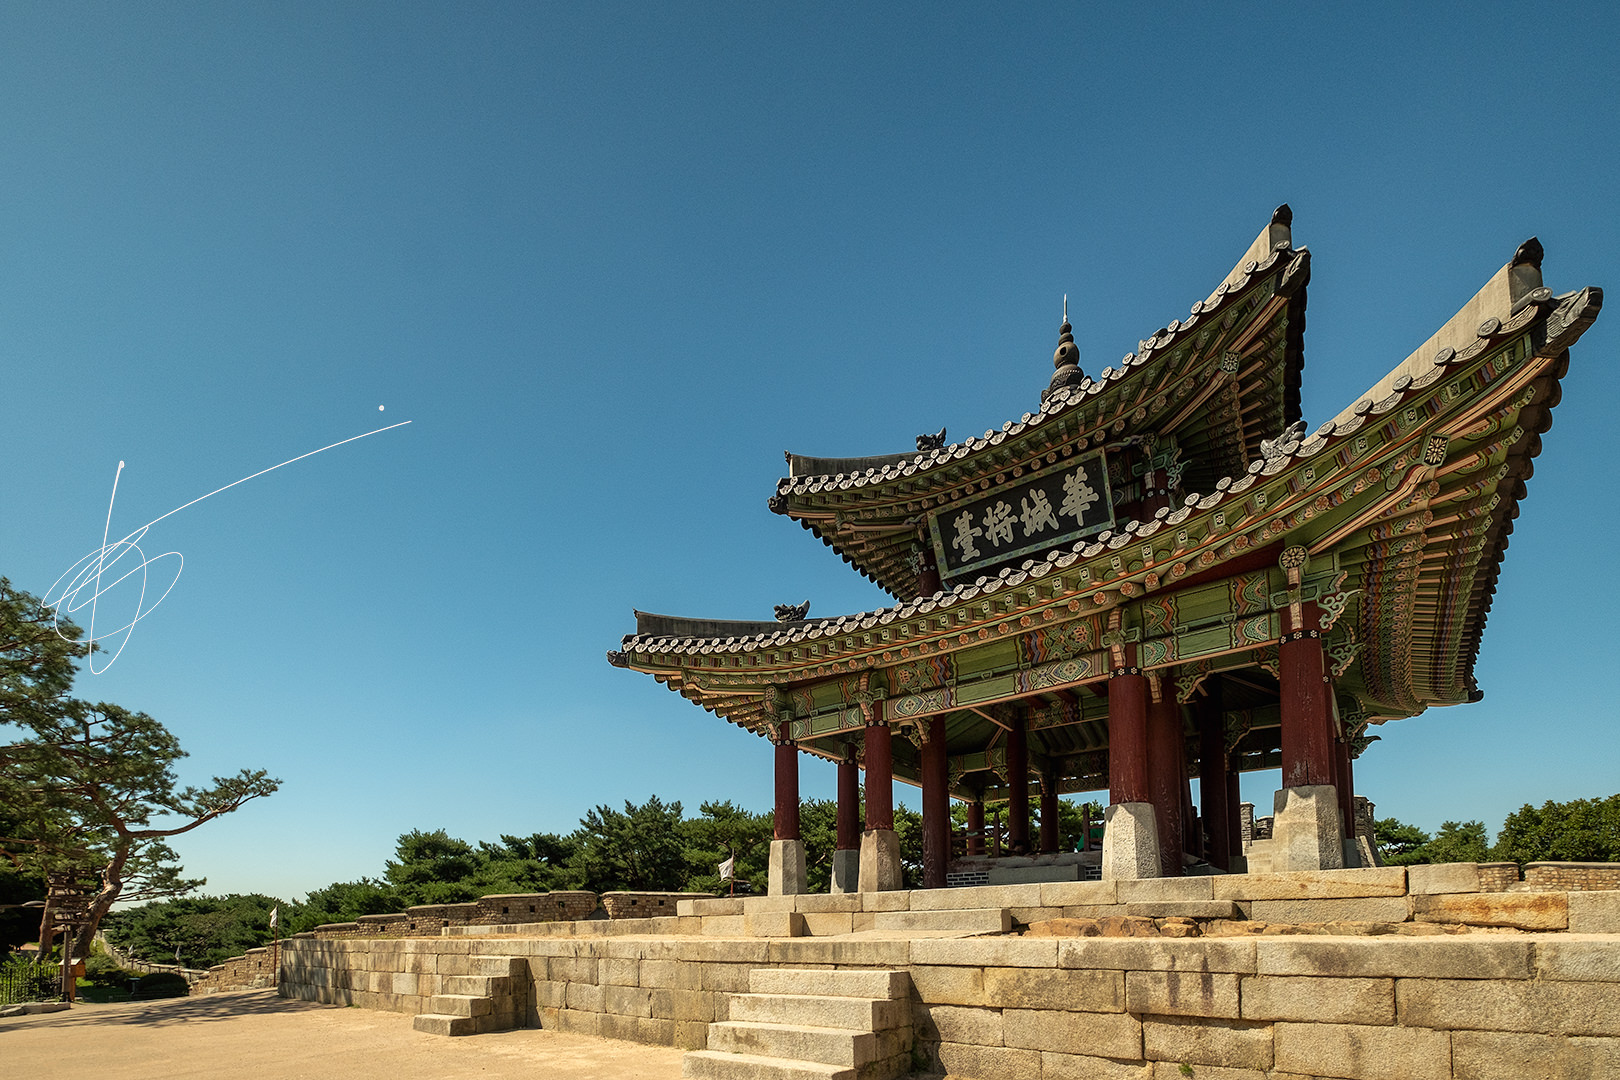 Korean Art in the Suwon fortress